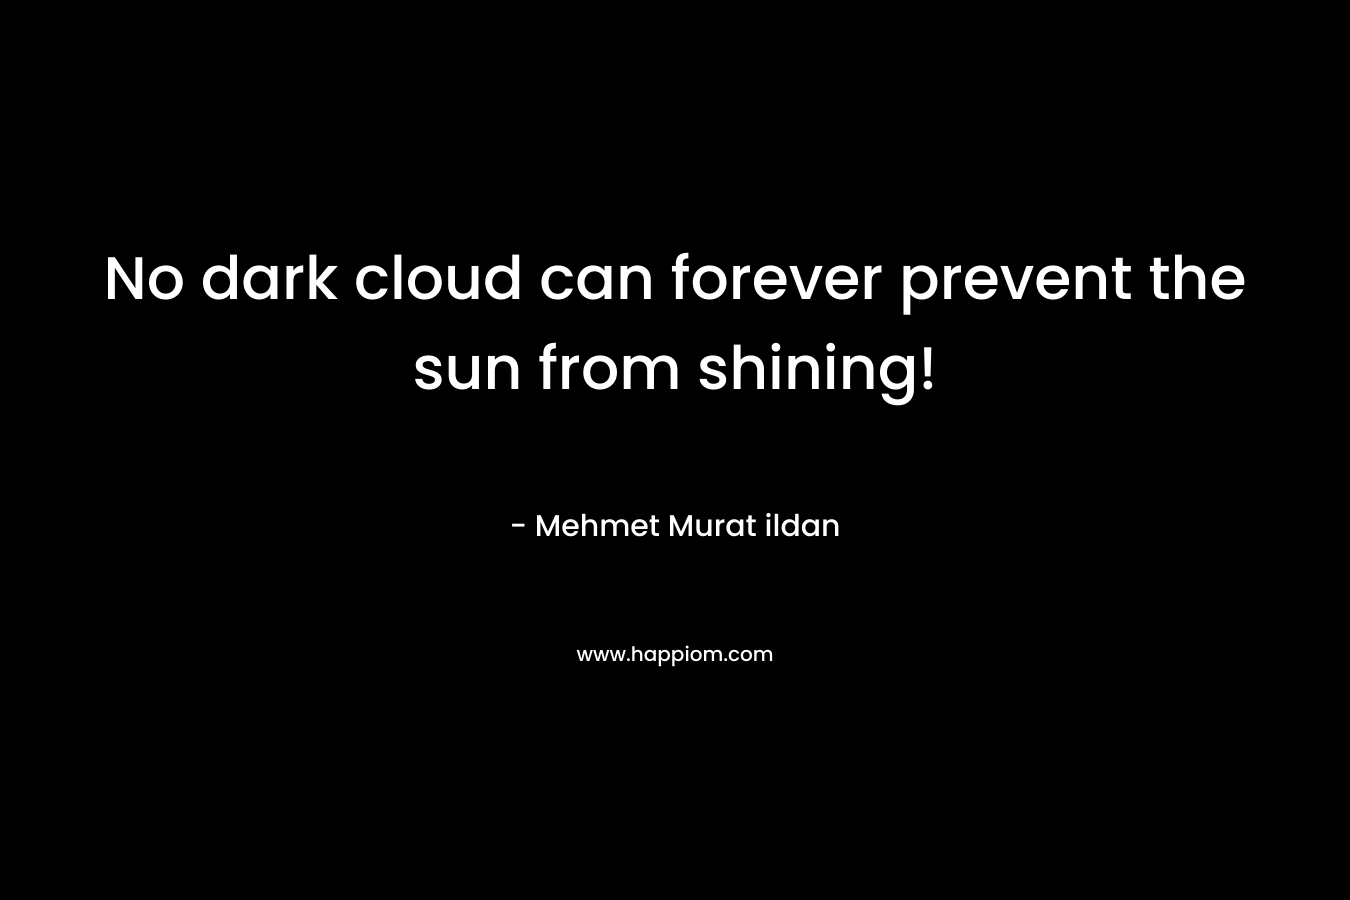 No dark cloud can forever prevent the sun from shining! – Mehmet Murat ildan